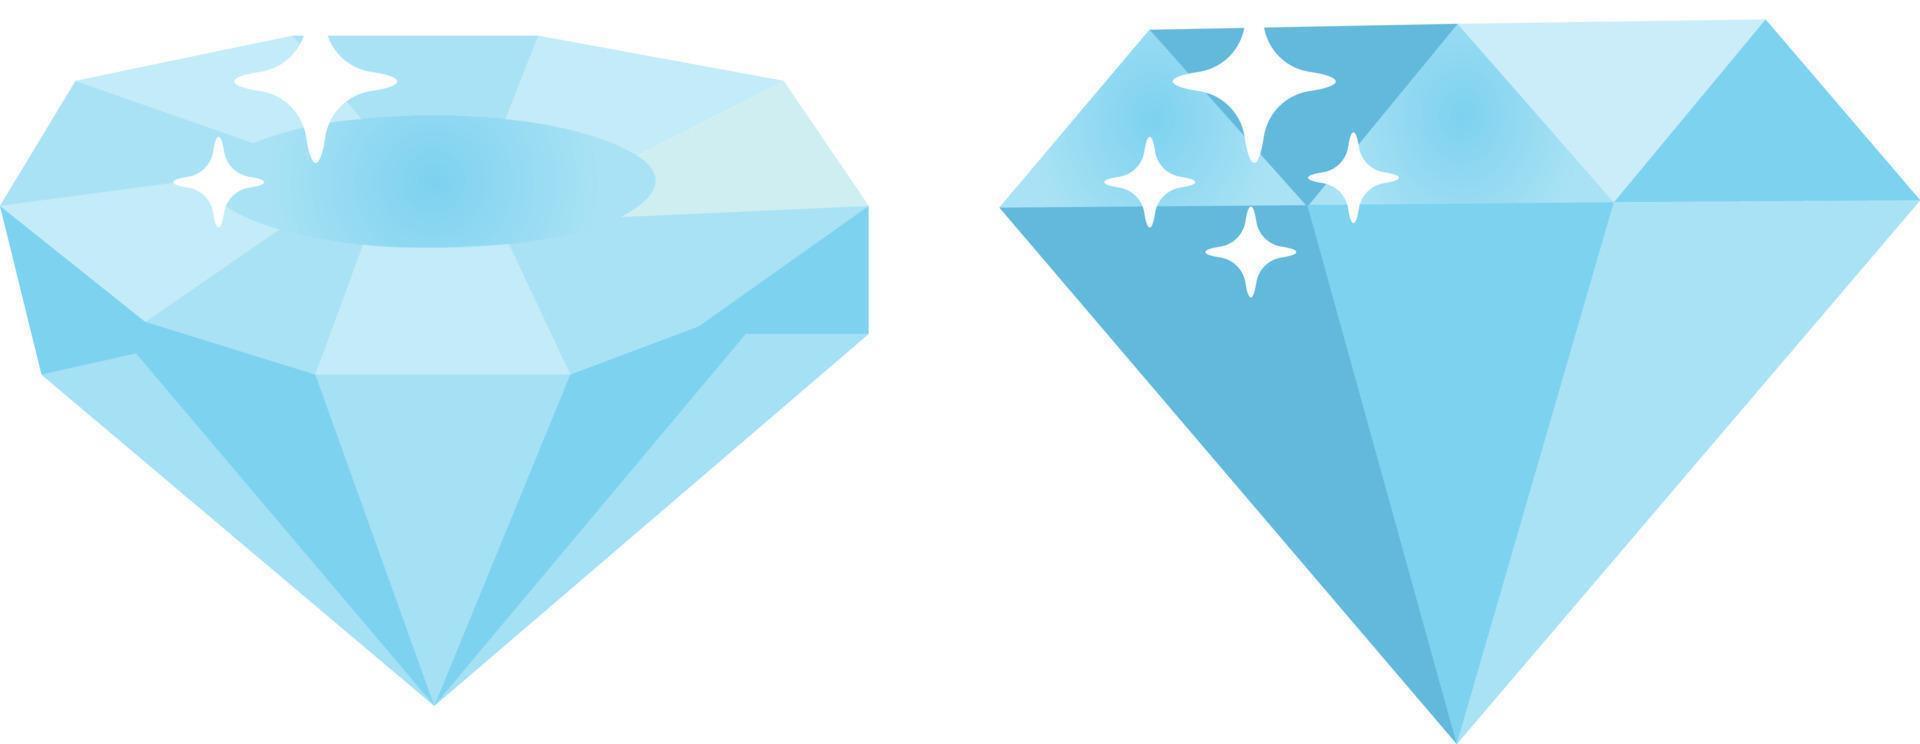 Blue diamond ,illustration, vector on white background.